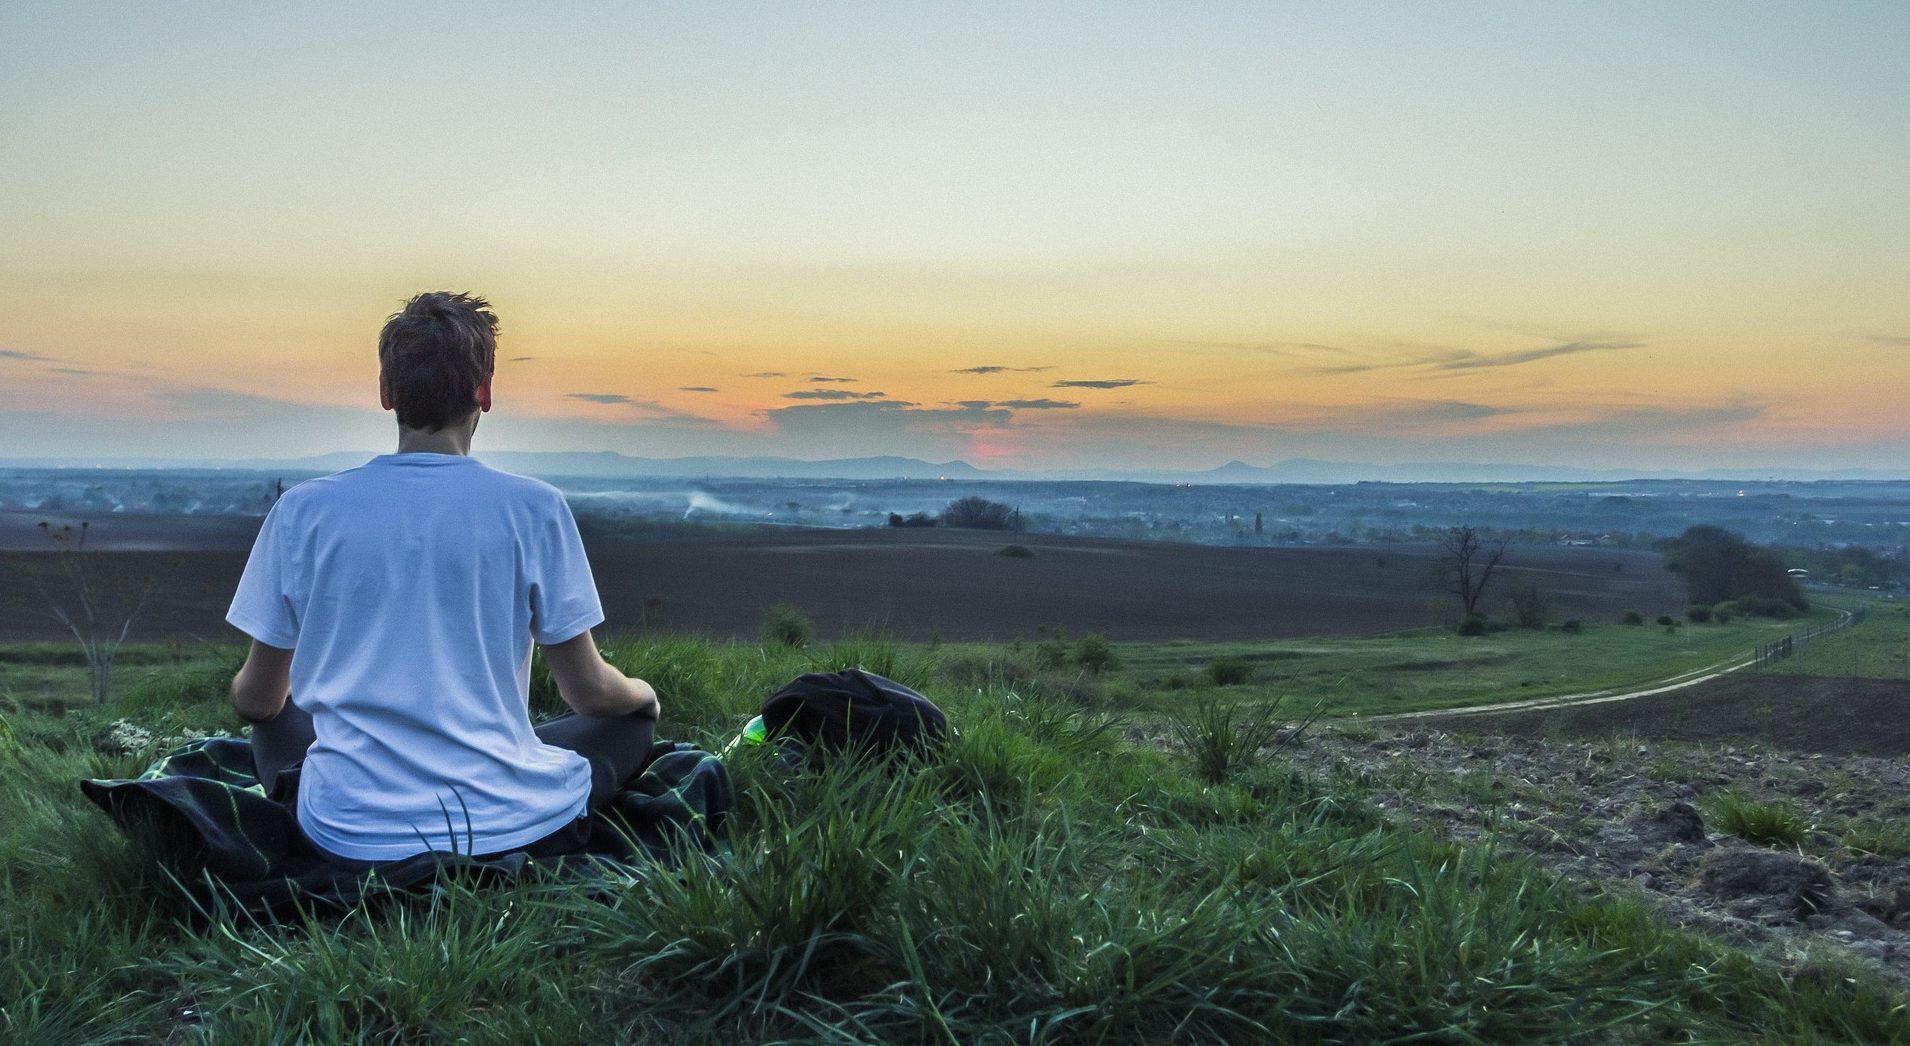 Meditation: Receiving Life with an Open Awareness (20:45 min.)